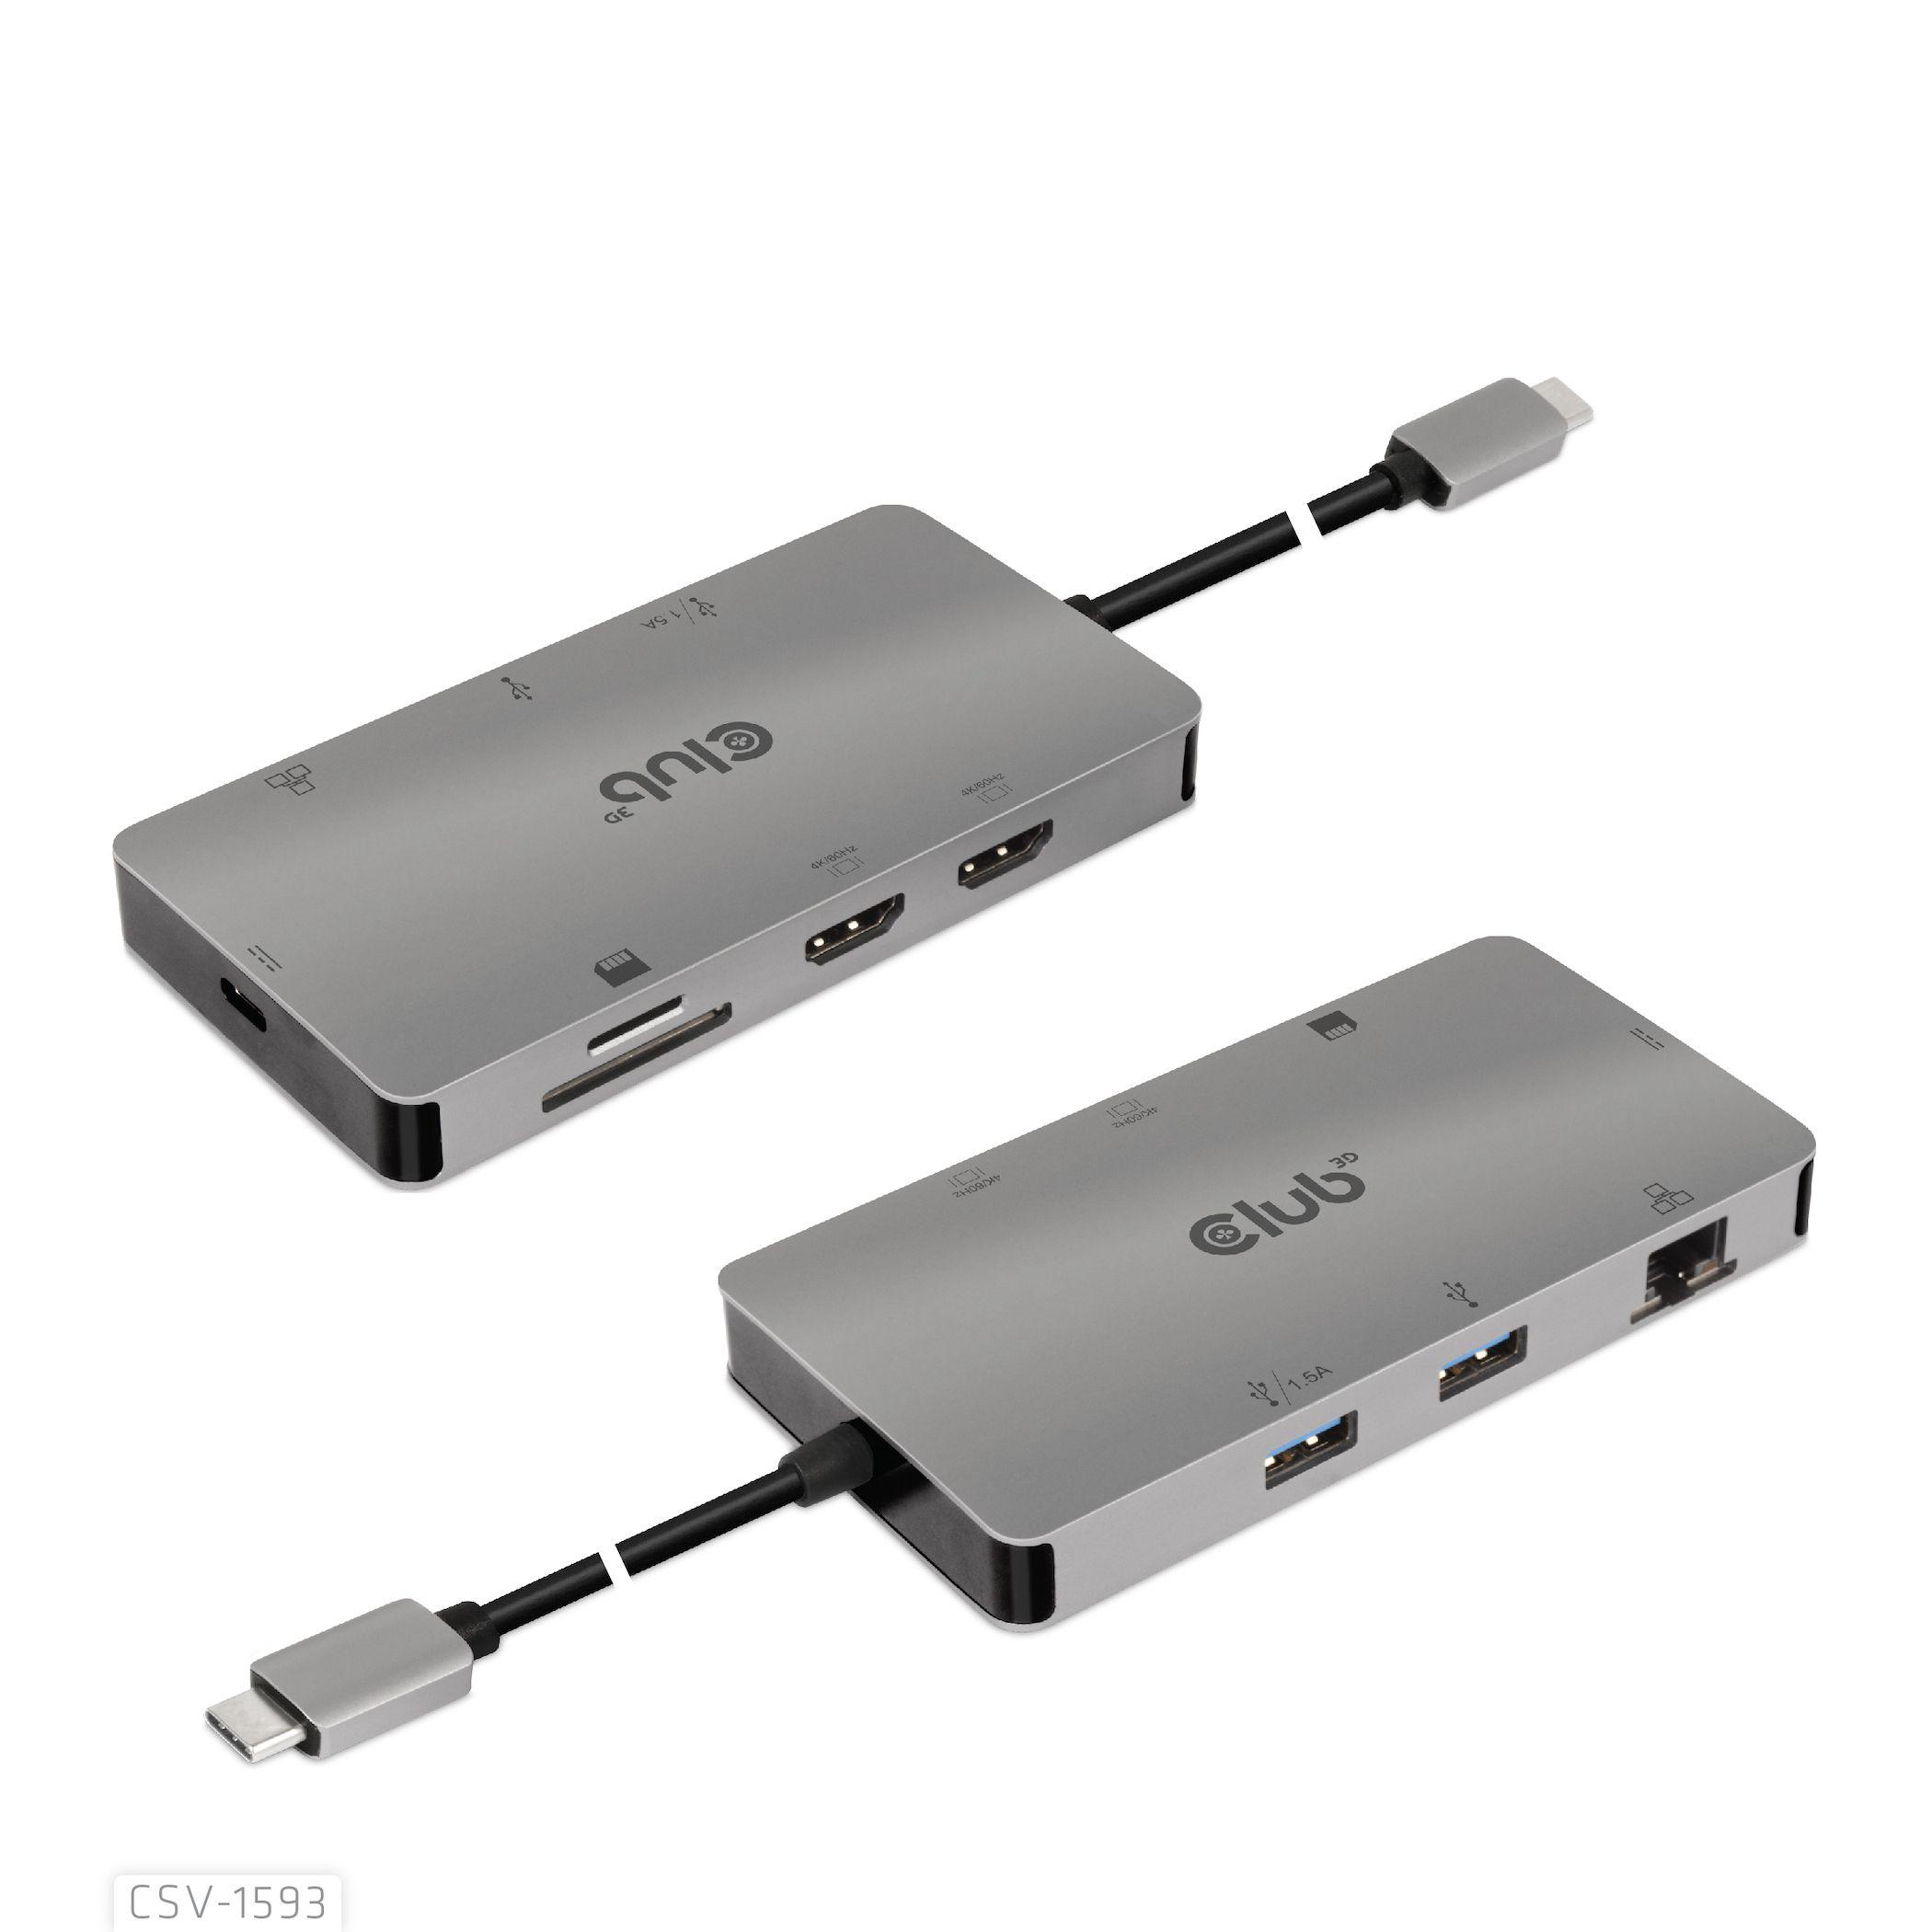 Hub Club3D CSV-1593 (USB 3.2 Gen1 Type-C 8-in-1 hub with 2x HDMI™, 2x USB-A, RJ45, SD/Micro SD card slots and USB Type-C female port)